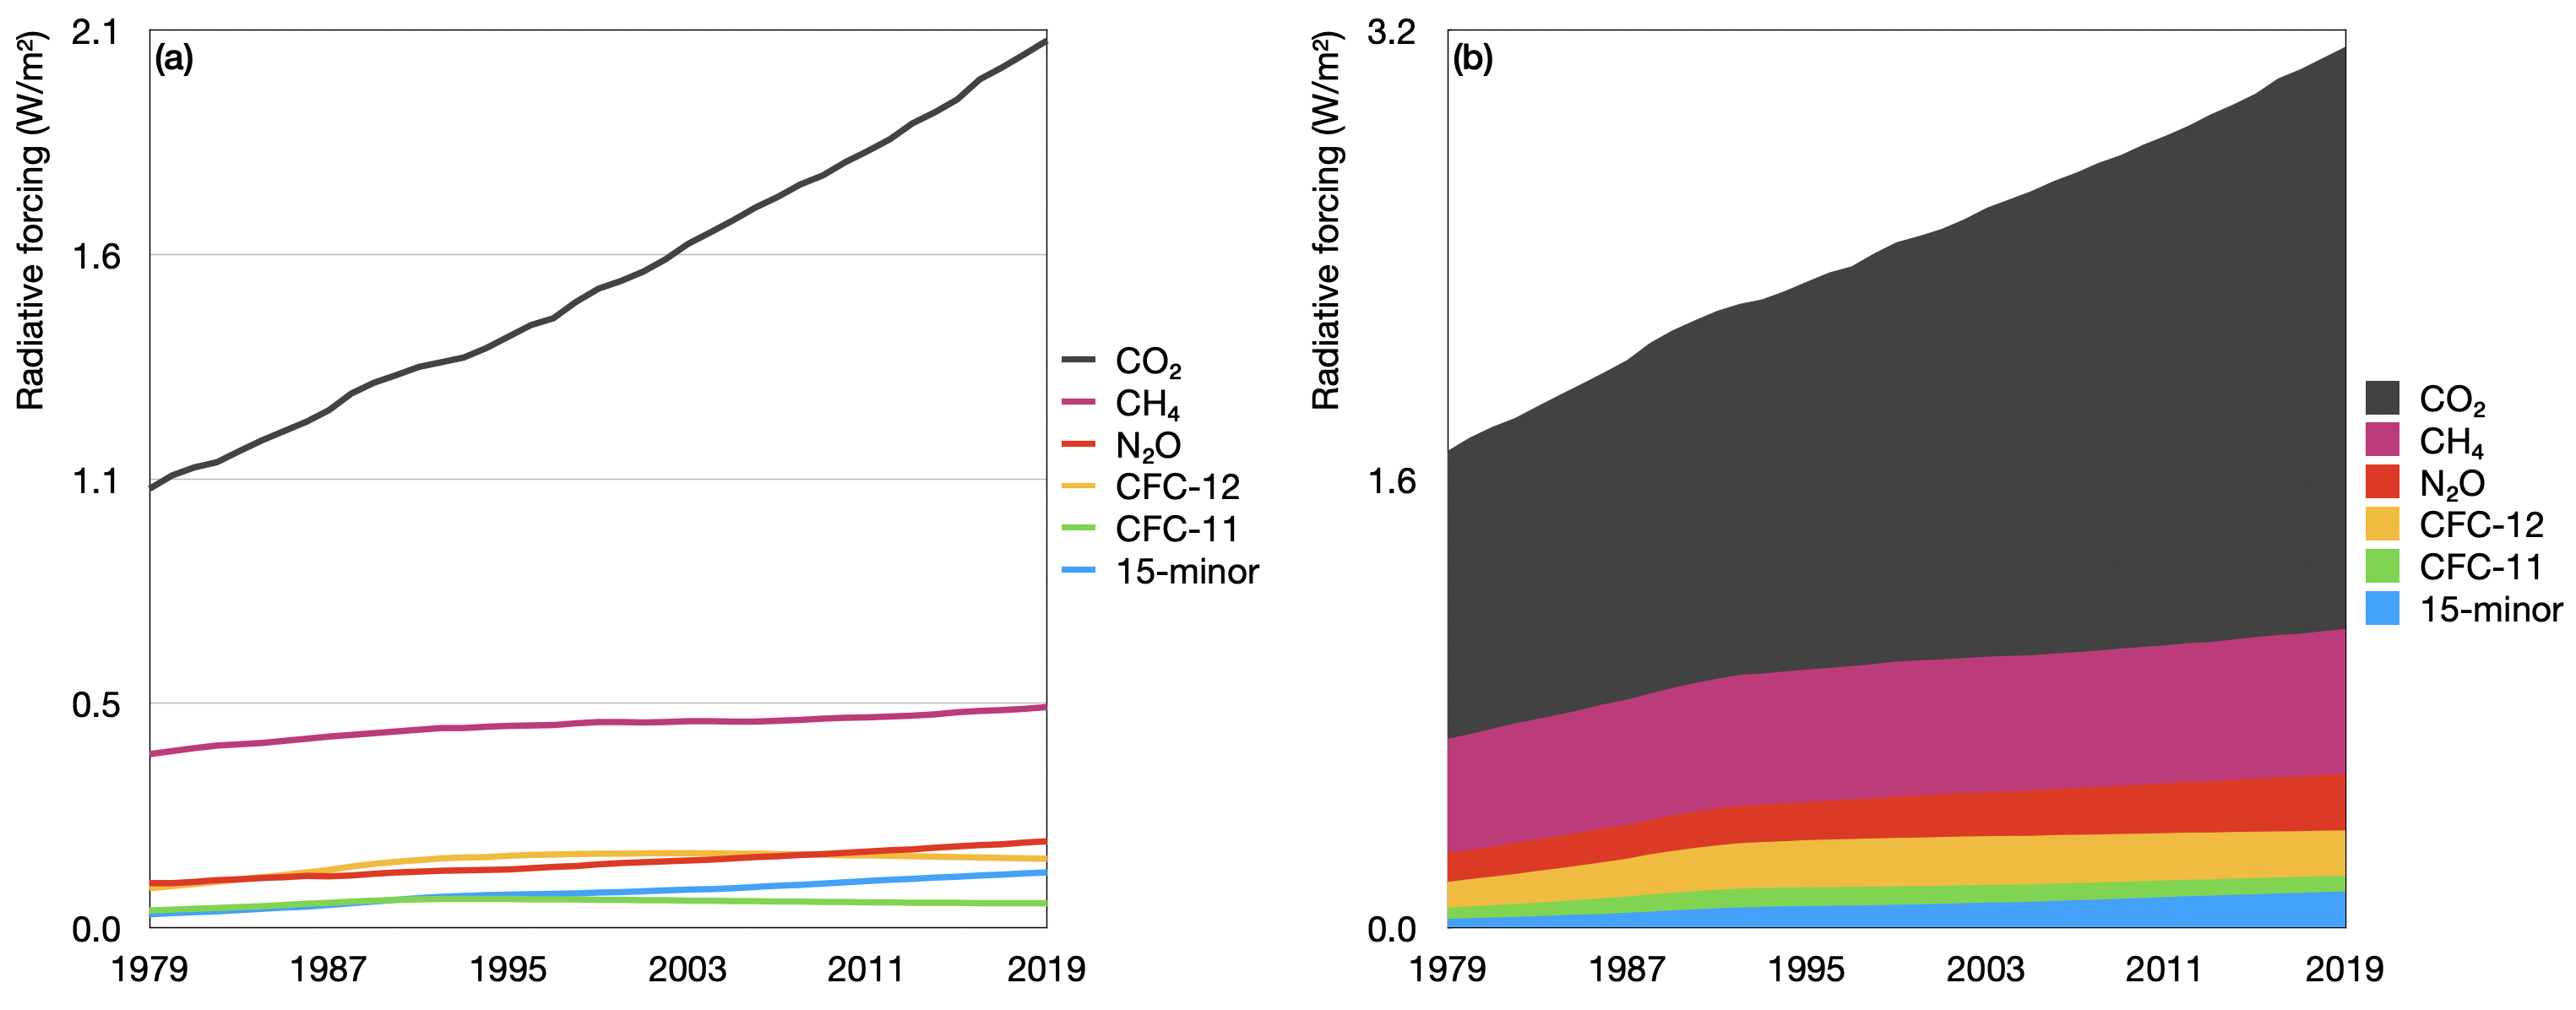 Greenhouse Gas Emissions World Energy Data